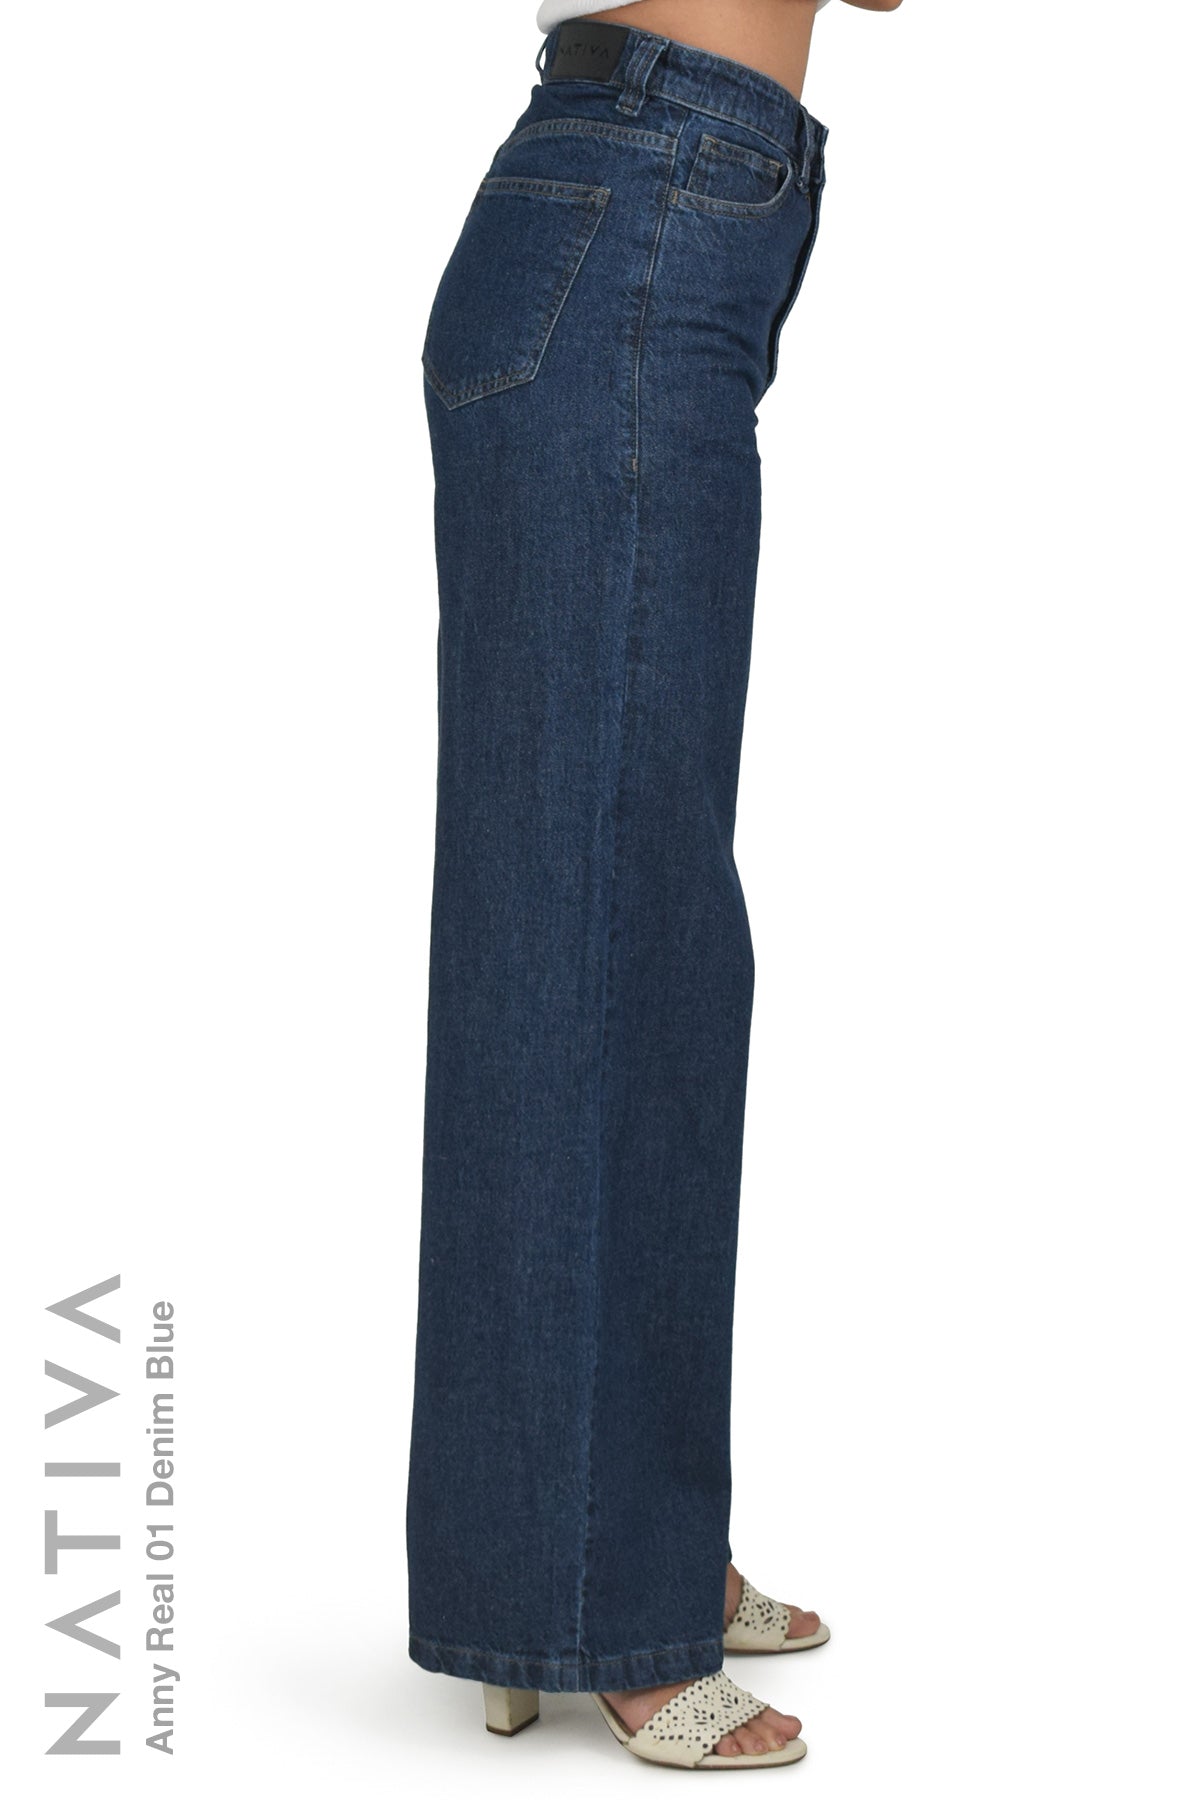 WIDE LEG True Denim Jeans, ANNY REAL 01 DENIM BLUE. Talle Alto. Auténtico e Interminable. Cintura Ajustable PERFECT FIT®